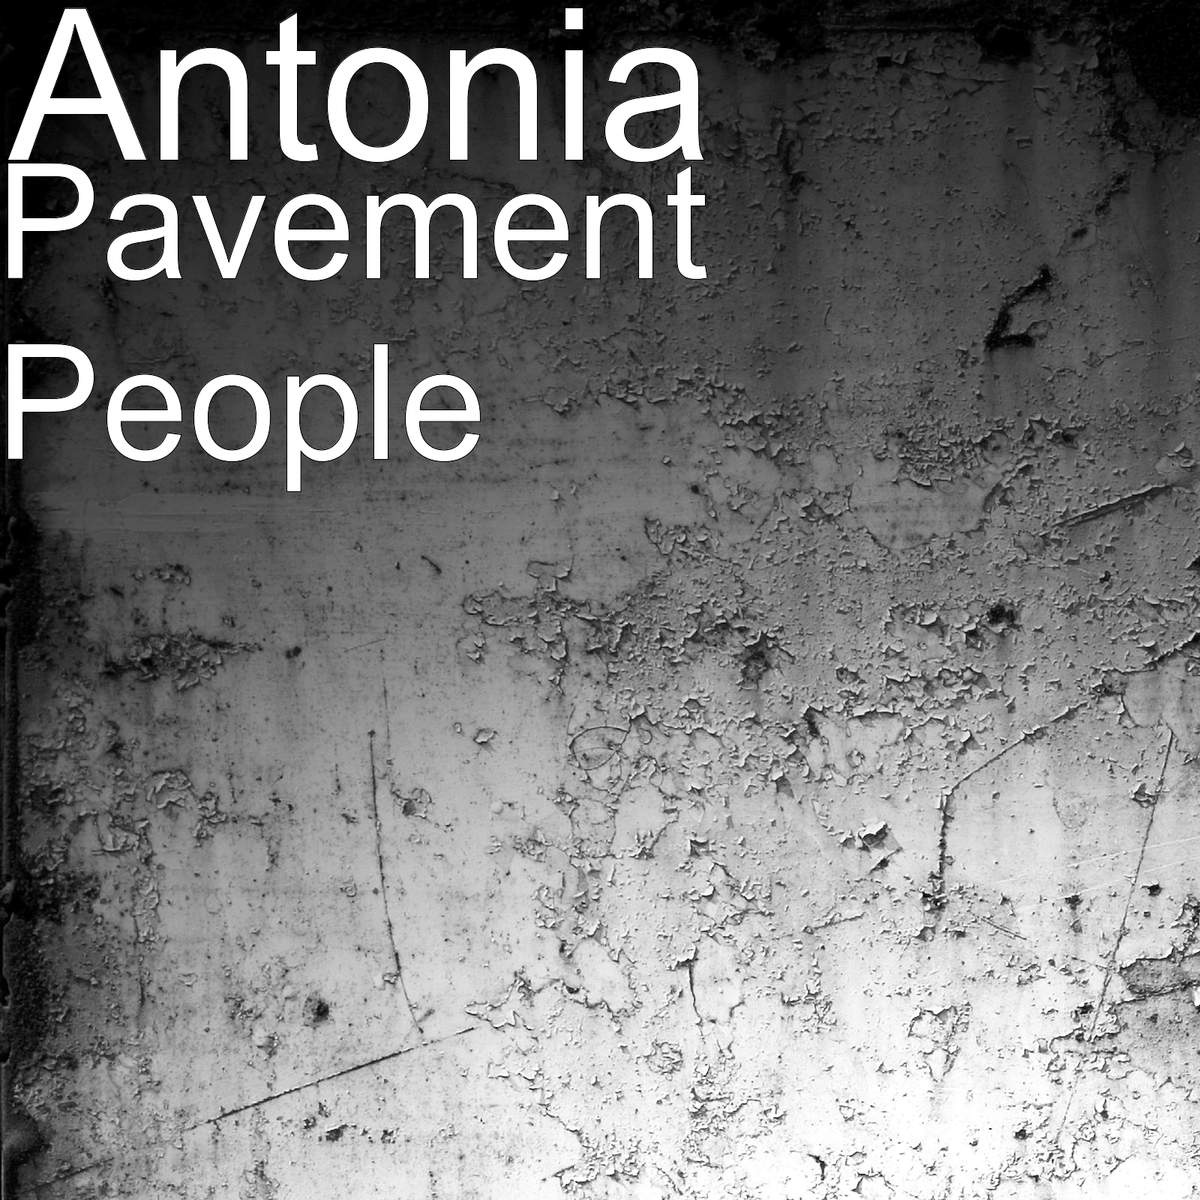 Pavement People